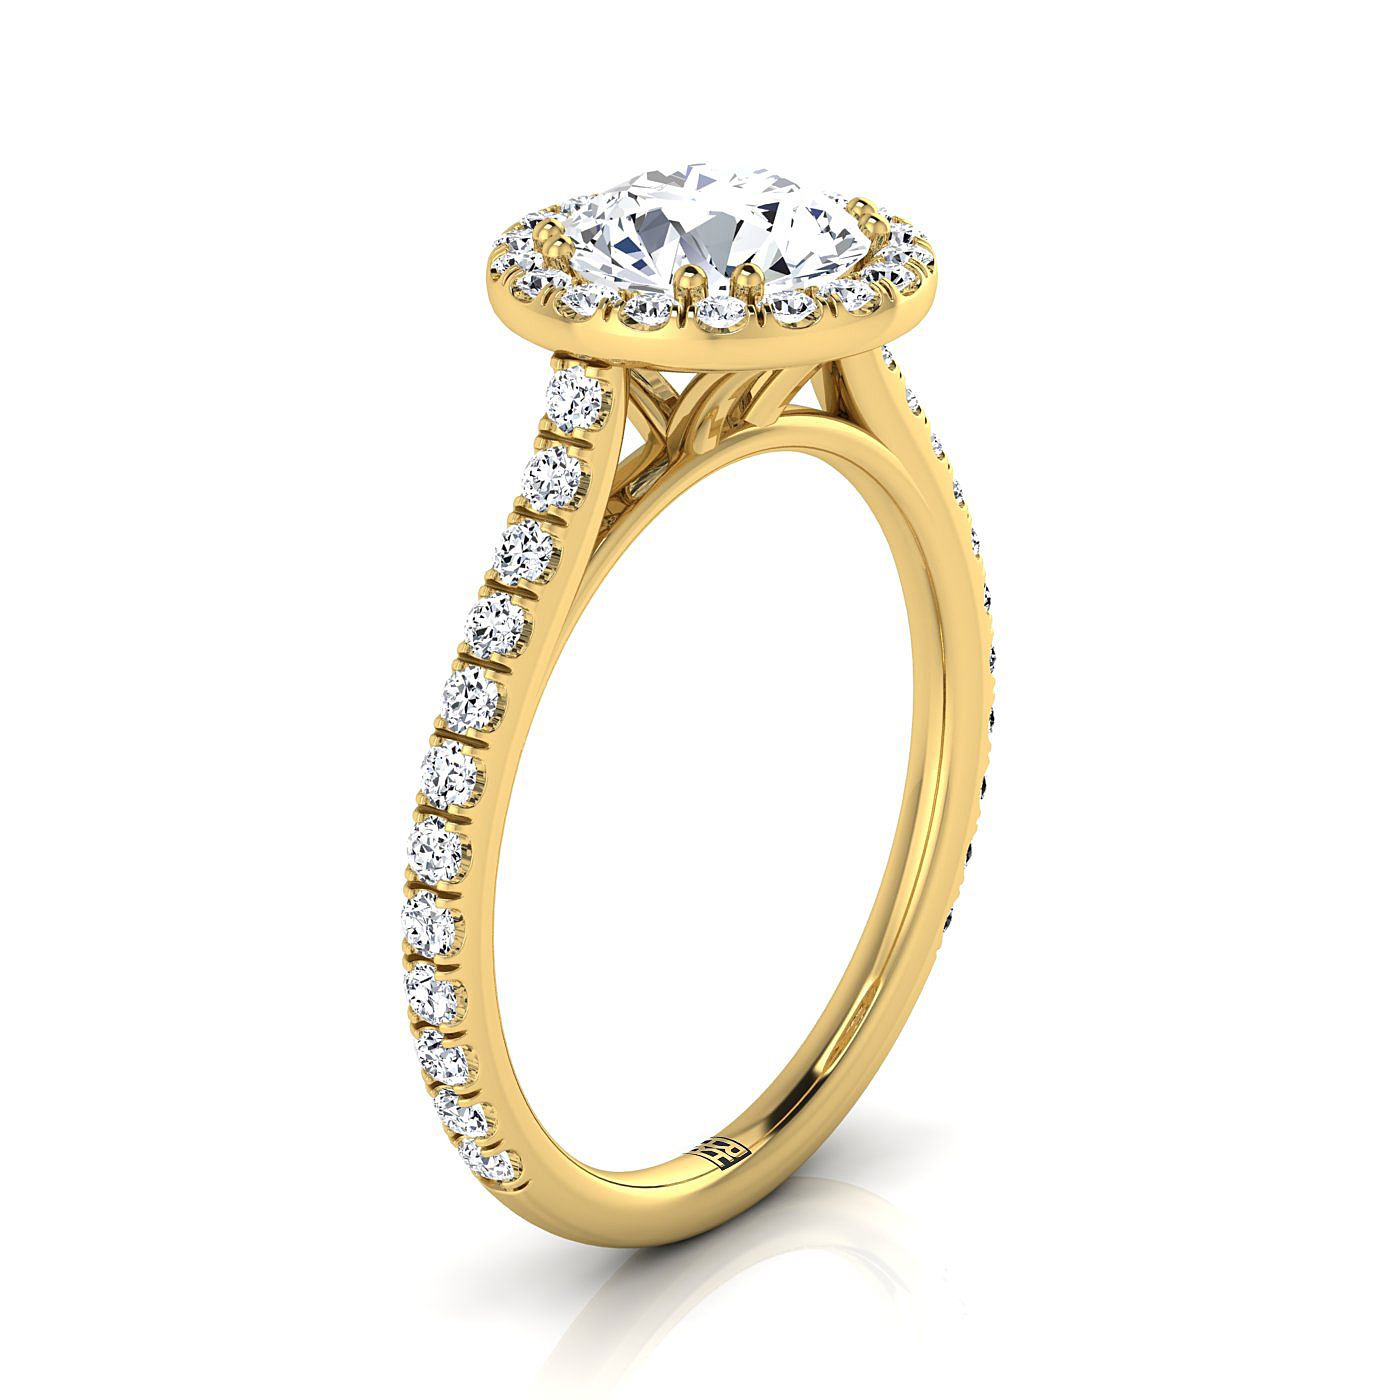 18K Yellow Gold Round Brilliant Aquamarine Horizontal Fancy East West Diamond Halo Engagement Ring -1/2ctw